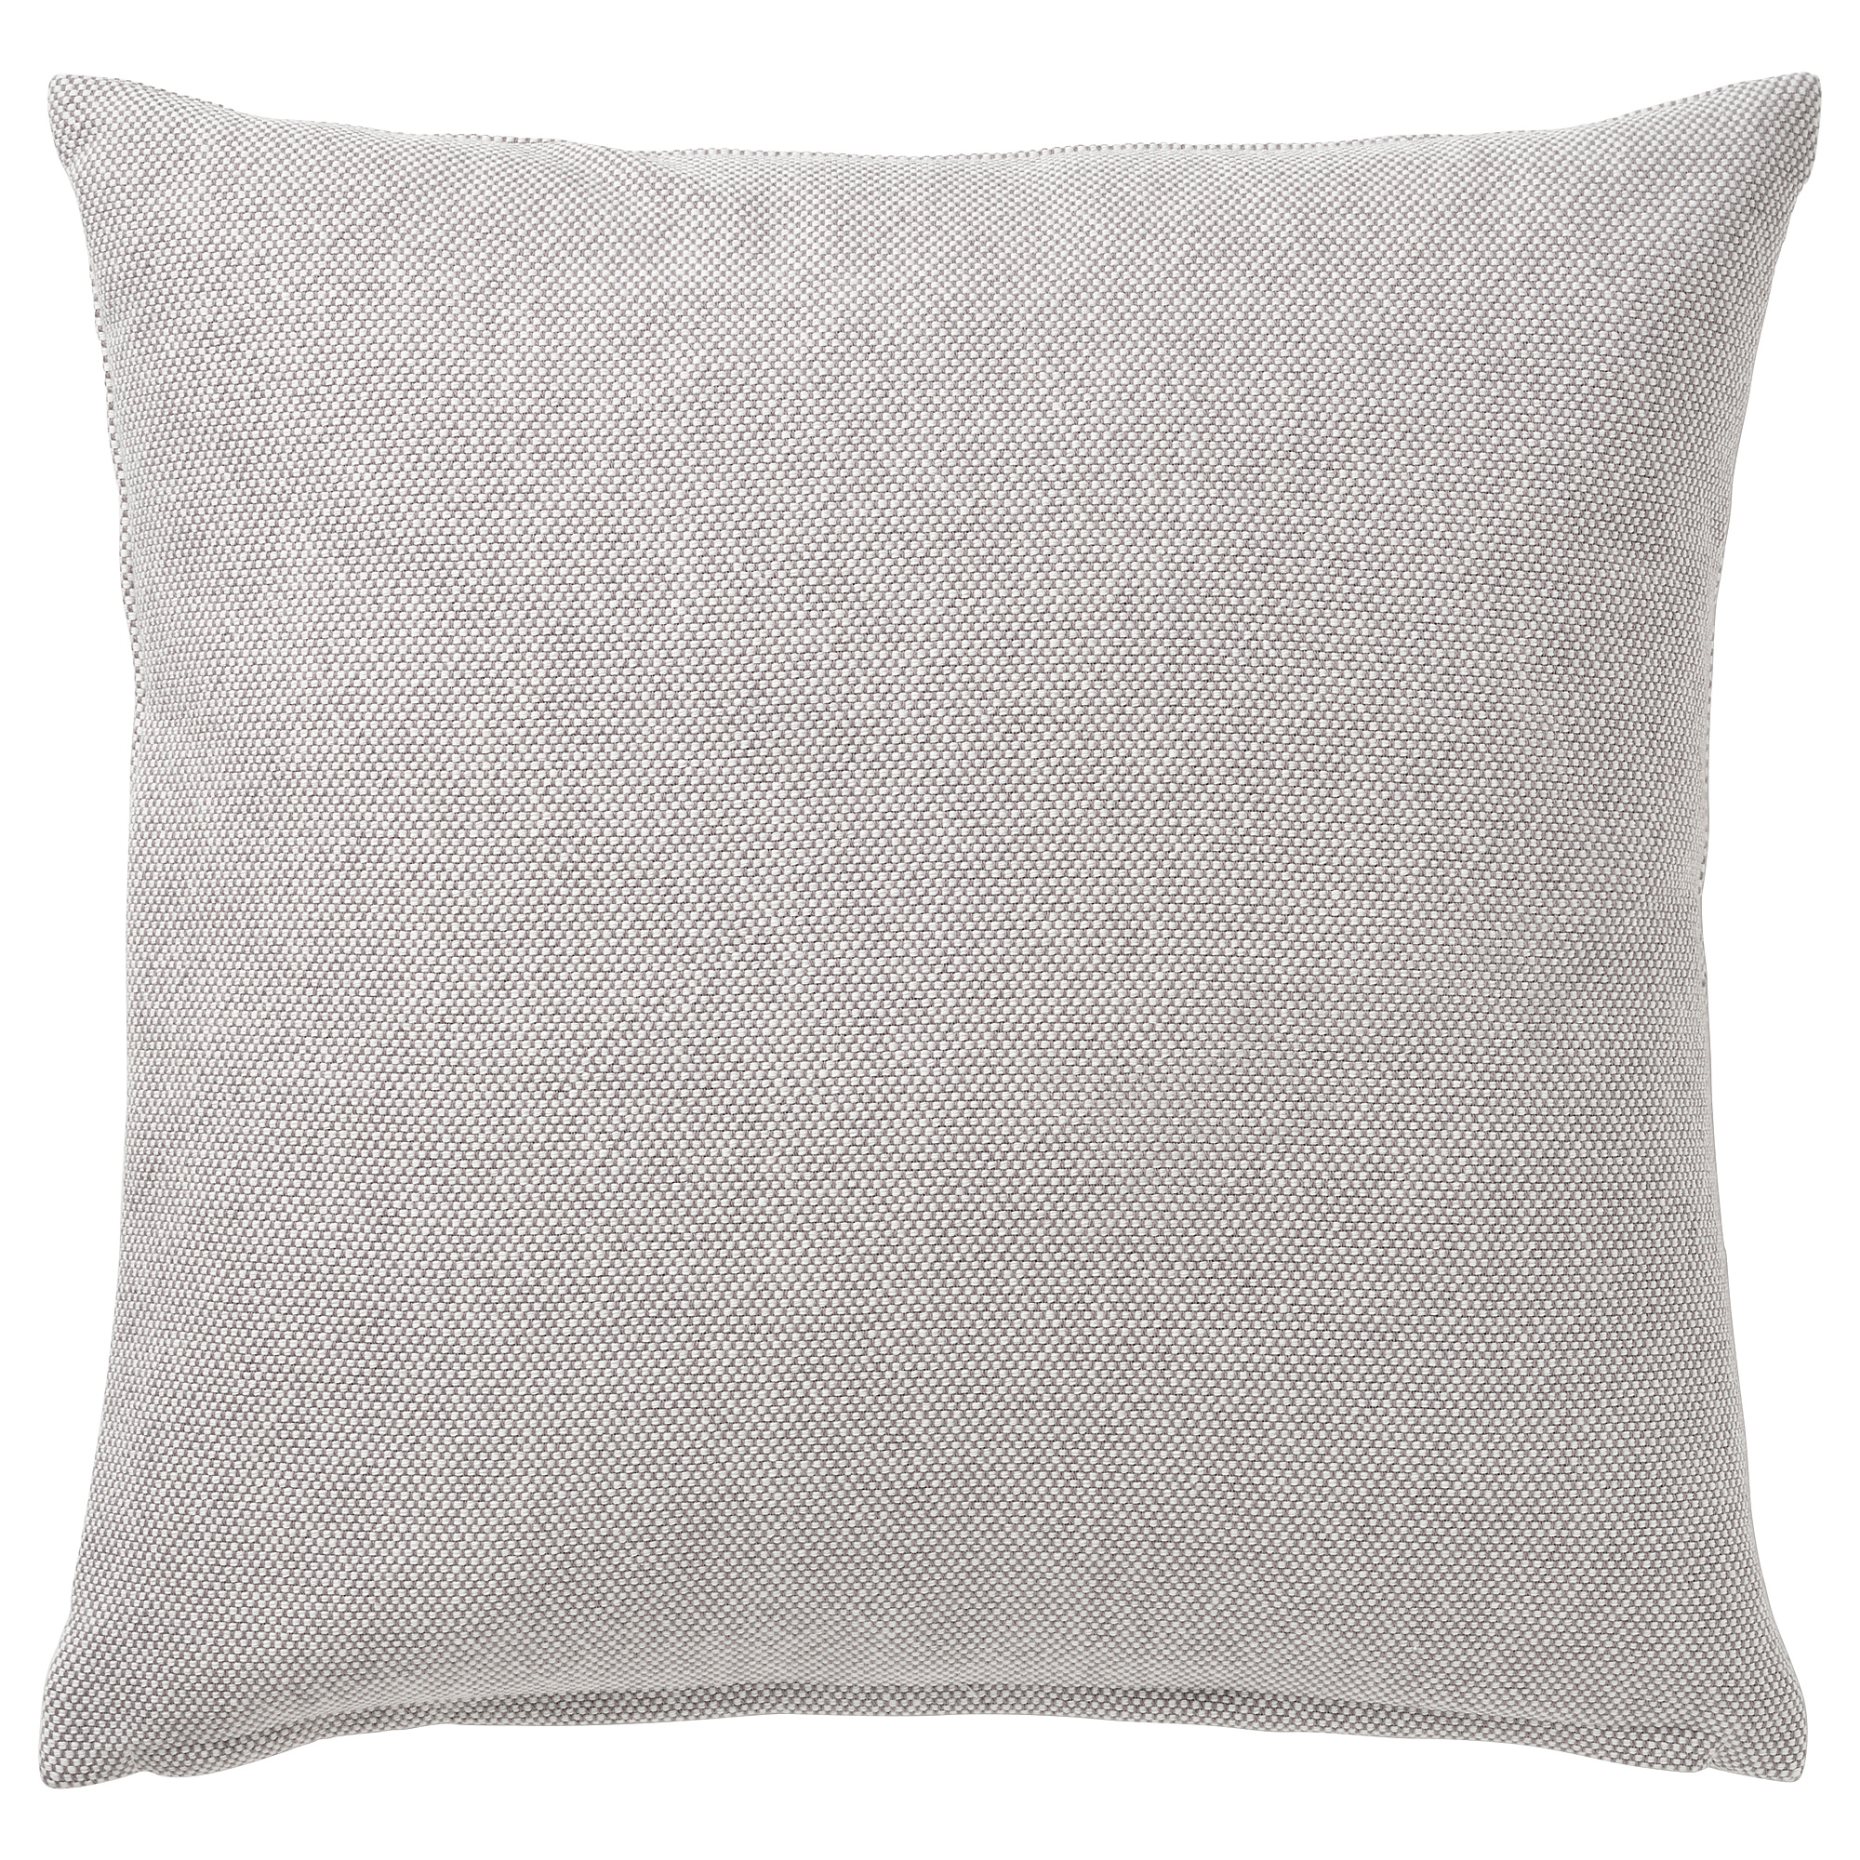 SANDTRAV, cushion, 45x45 cm, 605.106.97